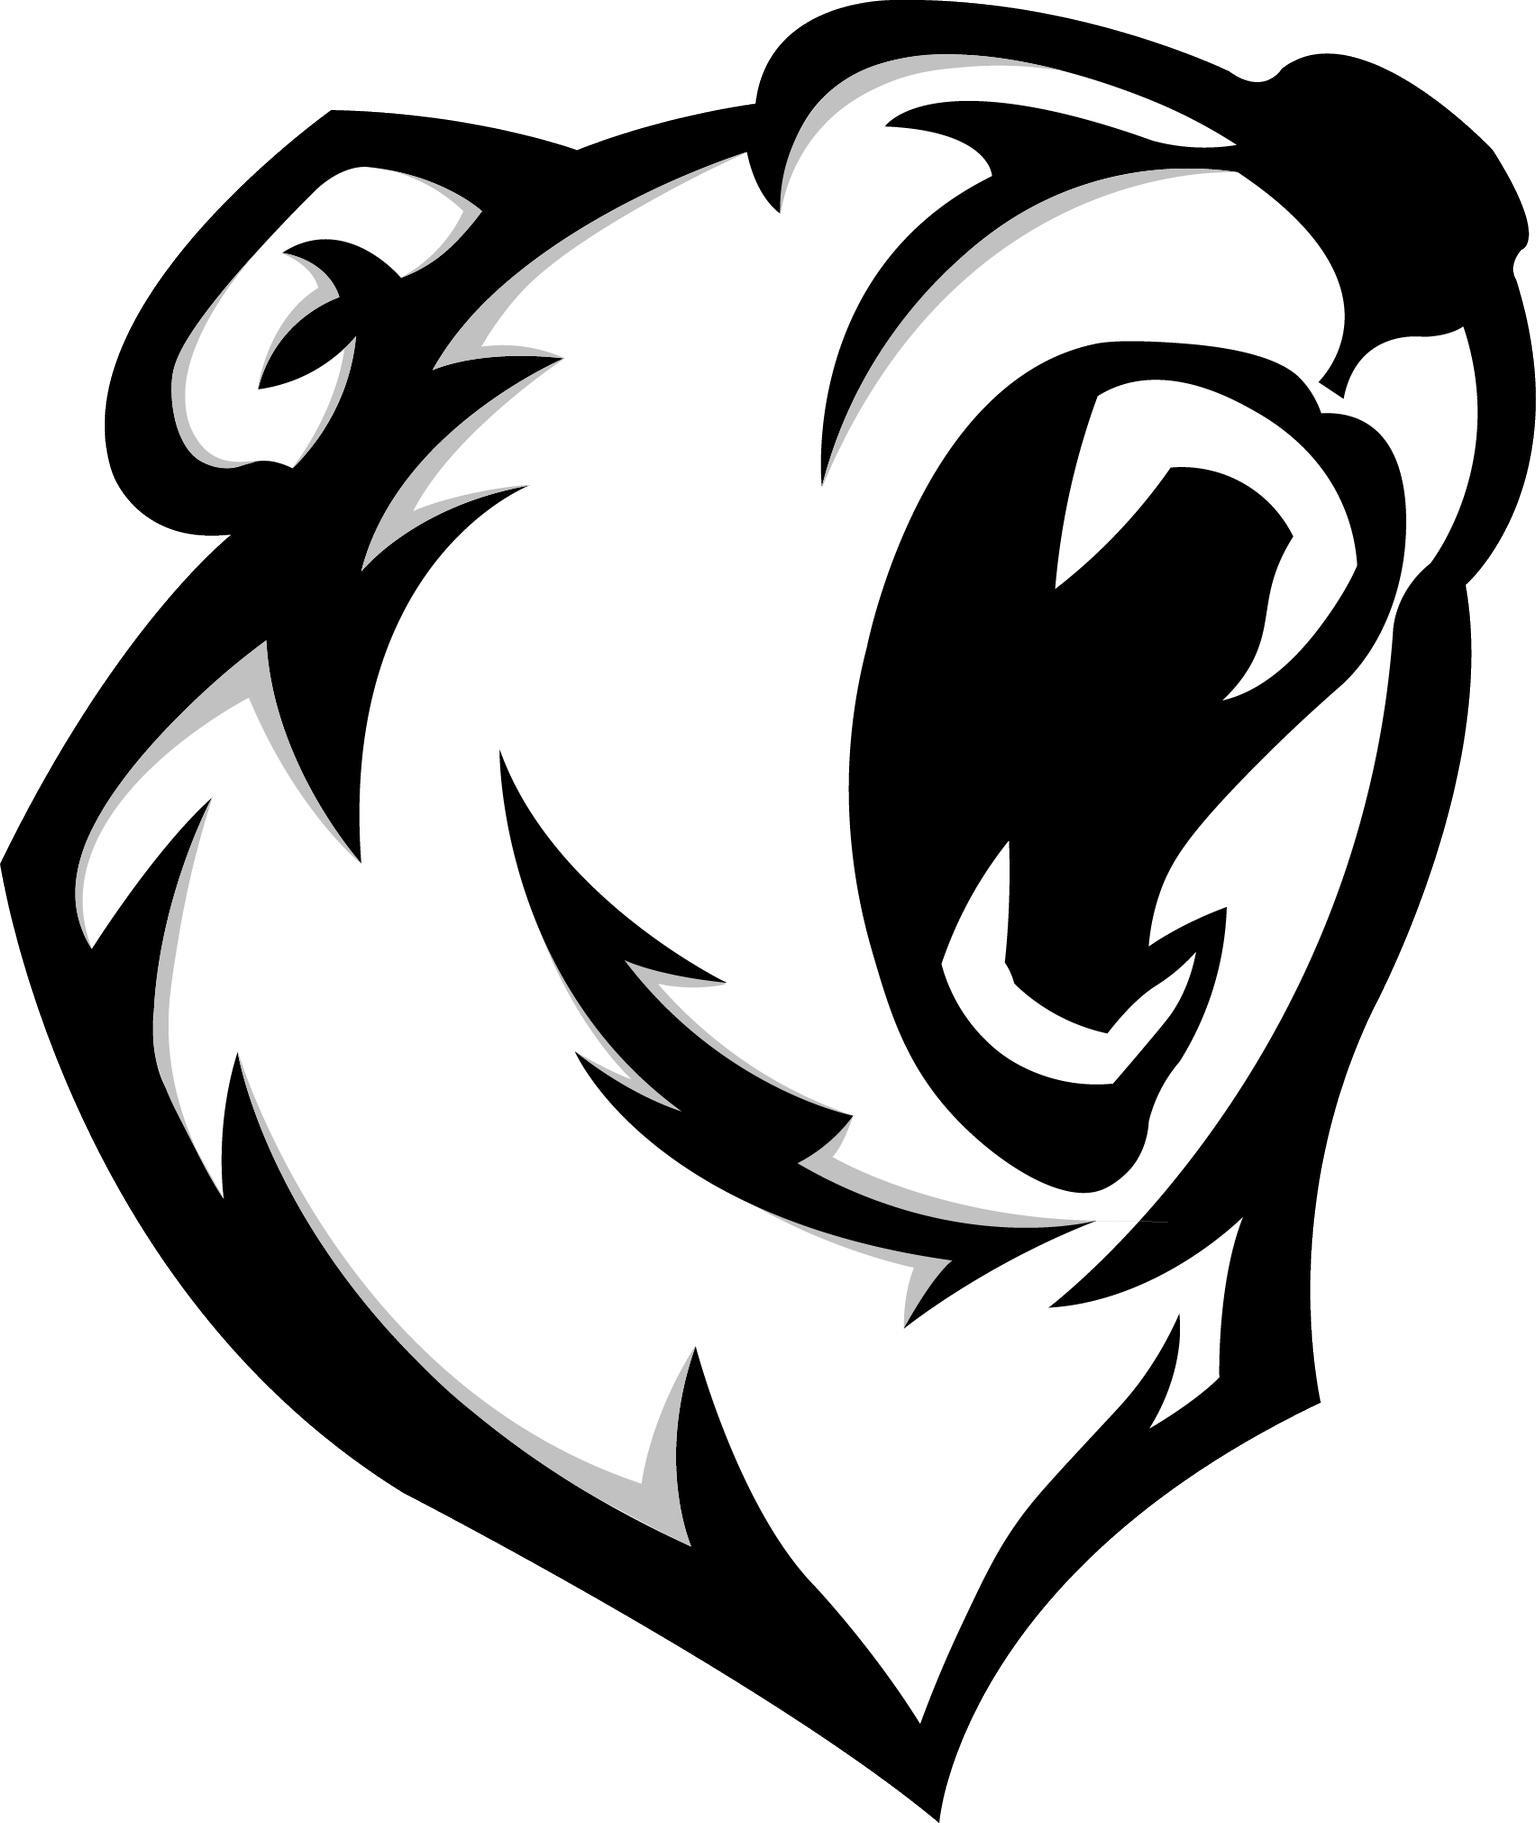 Polar Bear Logo - Polar Bear Mascot logo & speedart [Ckeck Comments] : logodesign